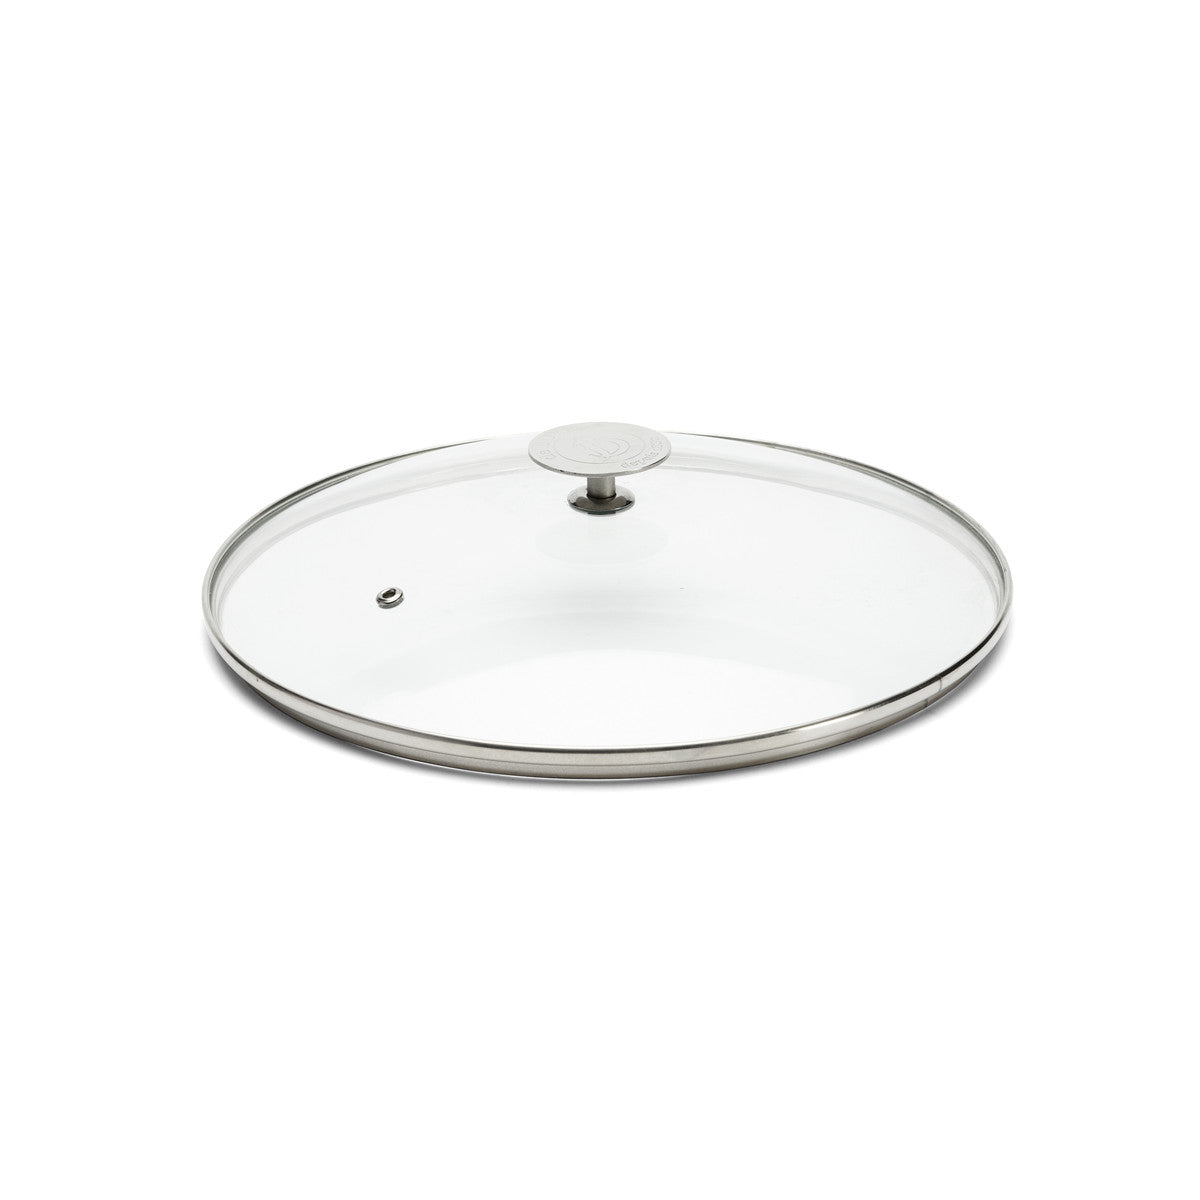 Glass lid with steel knob